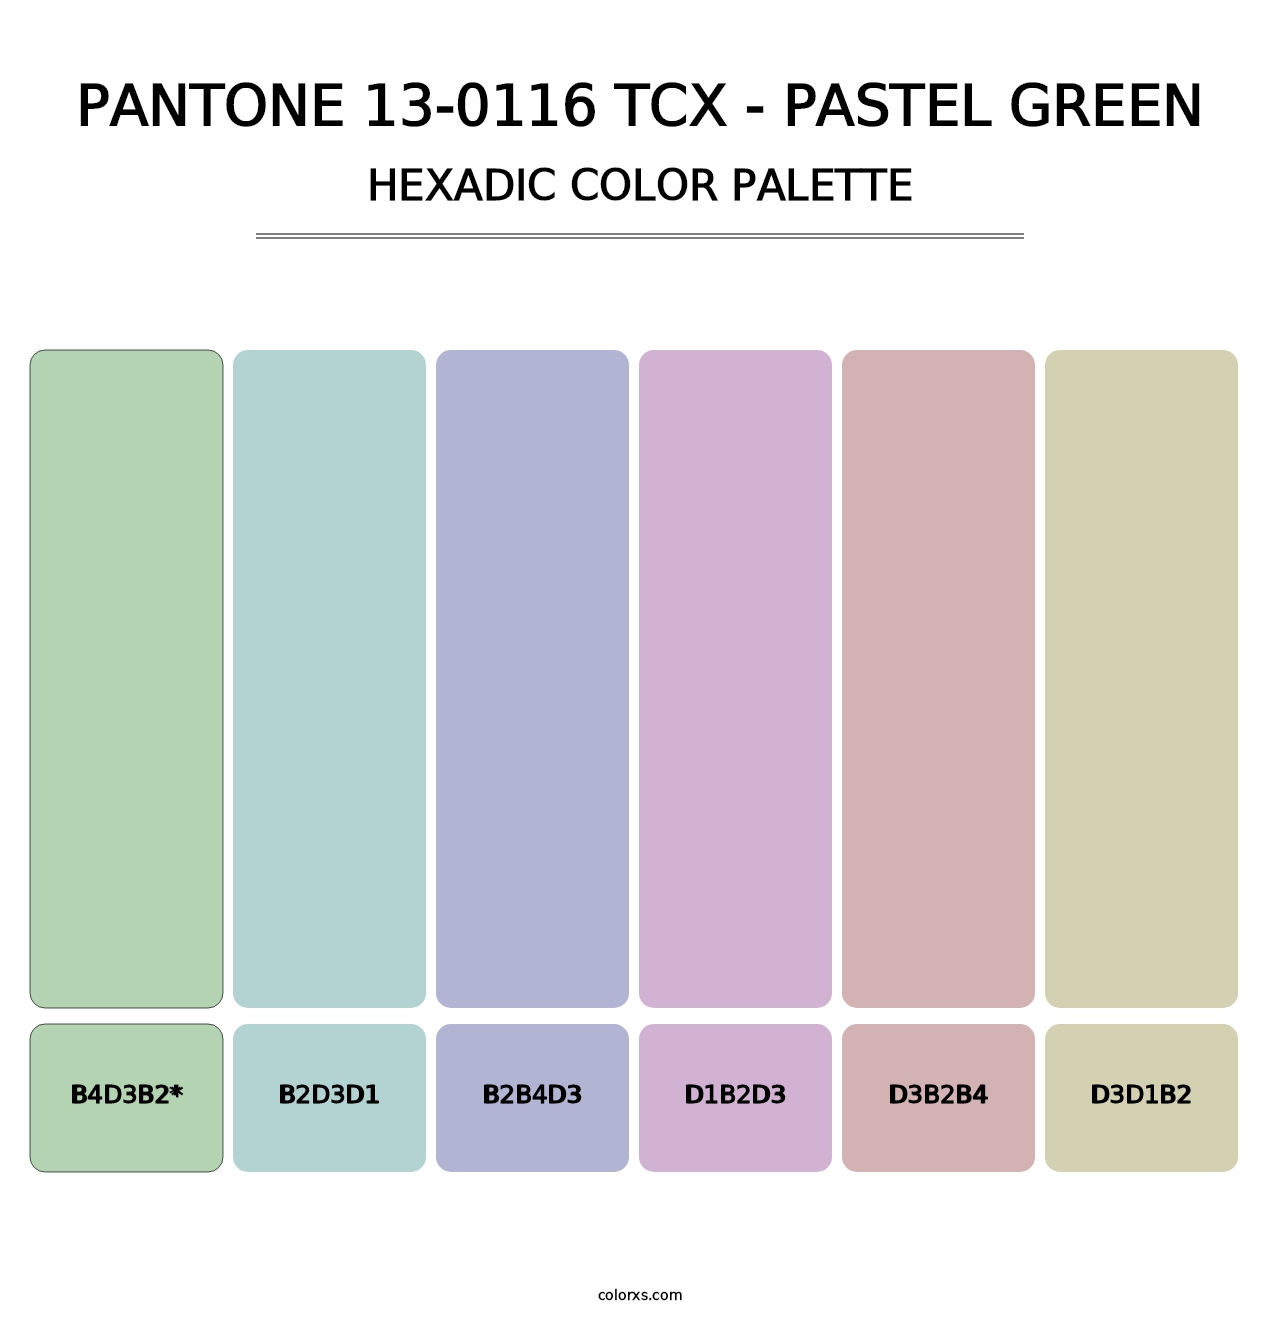 PANTONE 13-0116 TCX - Pastel Green - Hexadic Color Palette